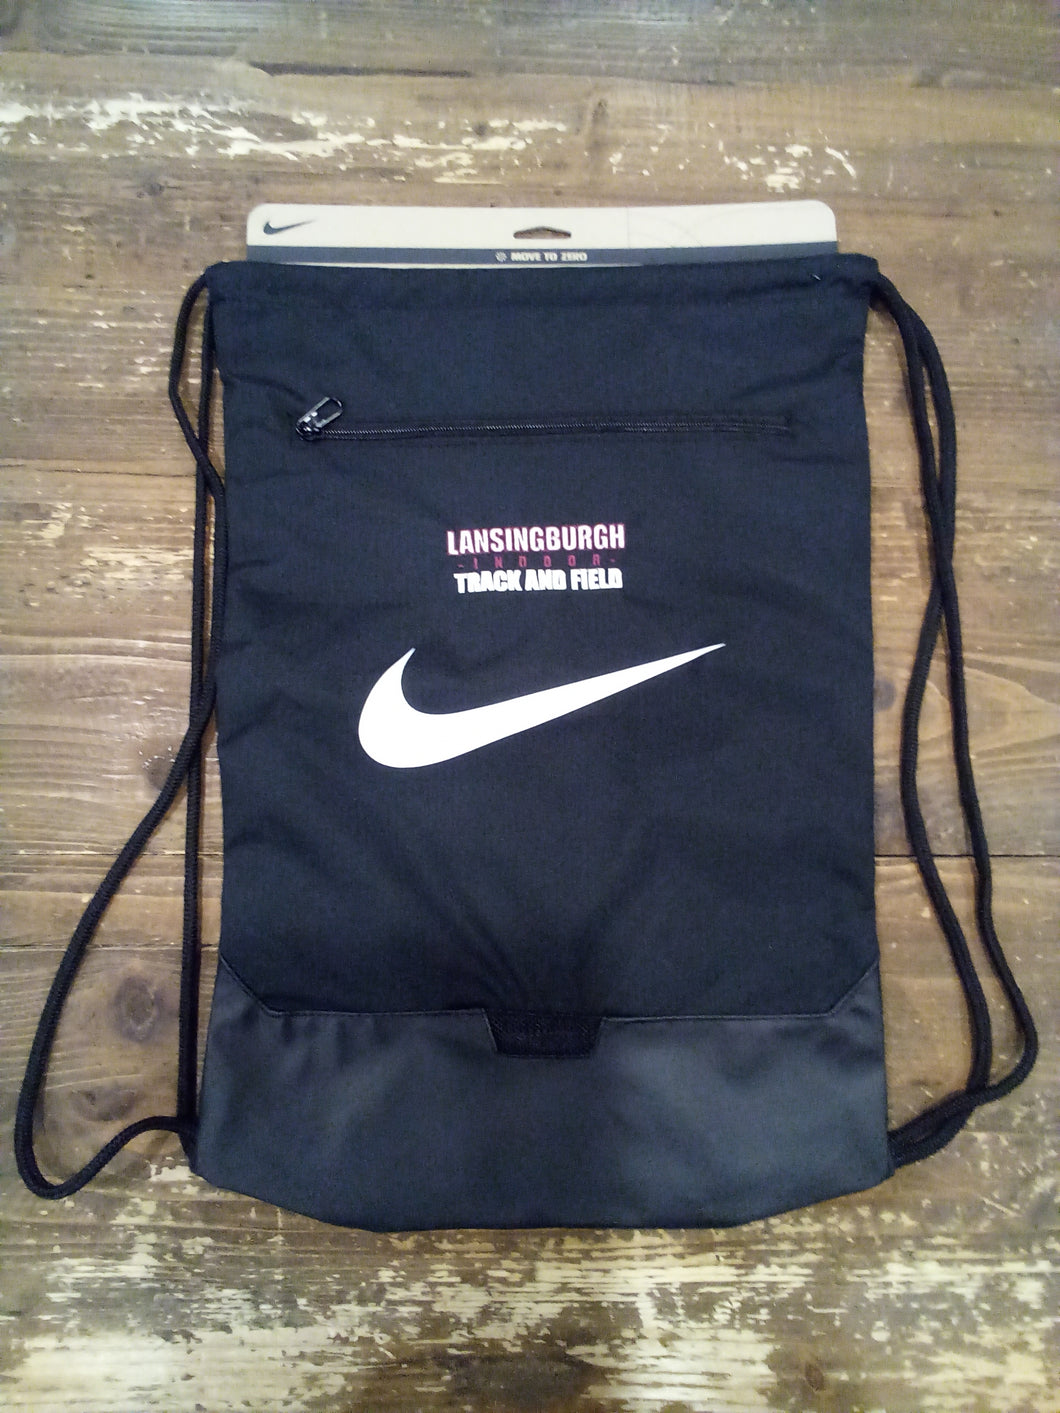 CLEARANCE - Lansingburgh Indoor Track & Field Nike Drawstring Bag